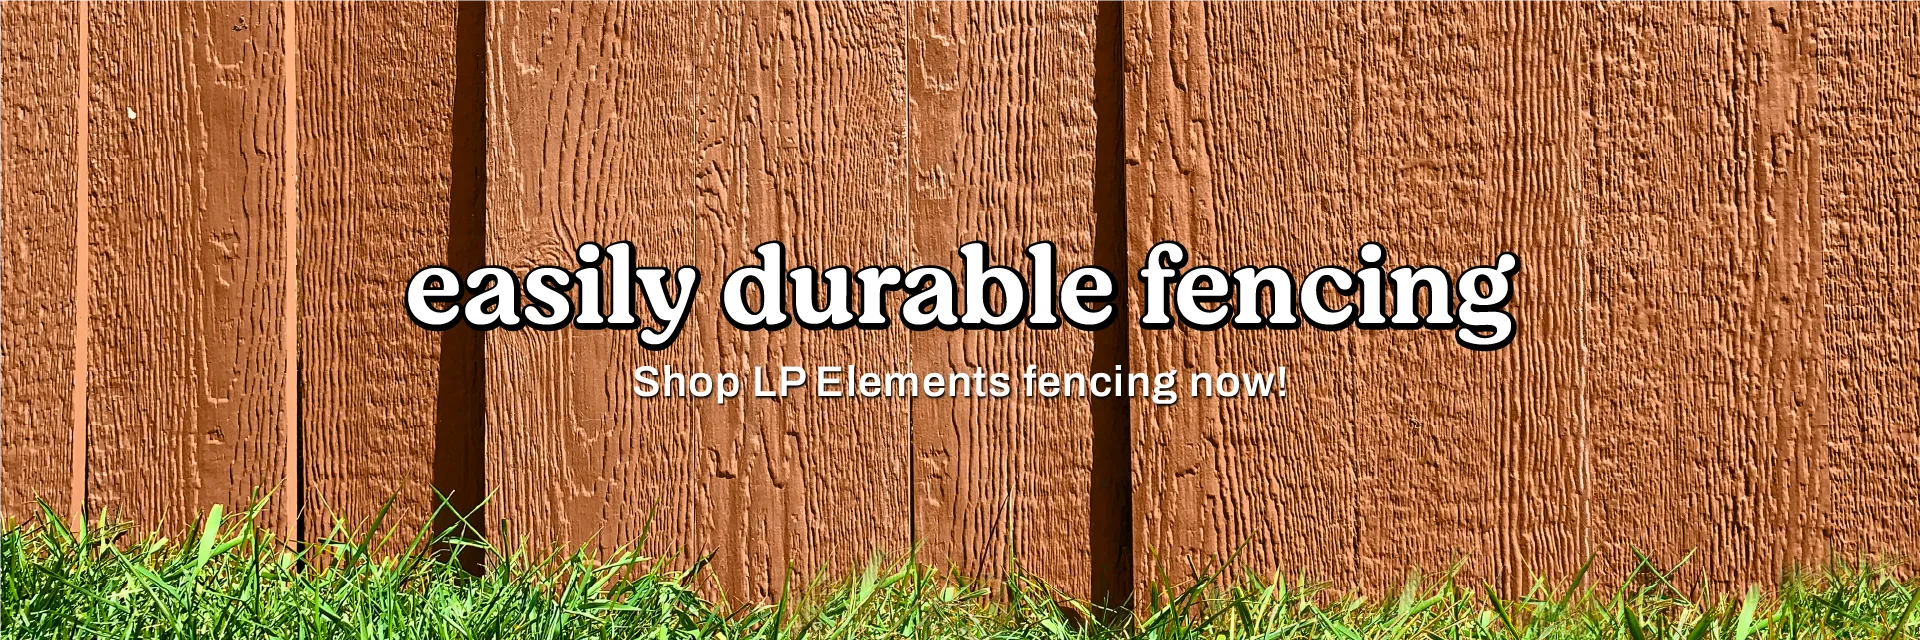 easily durable fencing! Shop LP Elements fencing now.